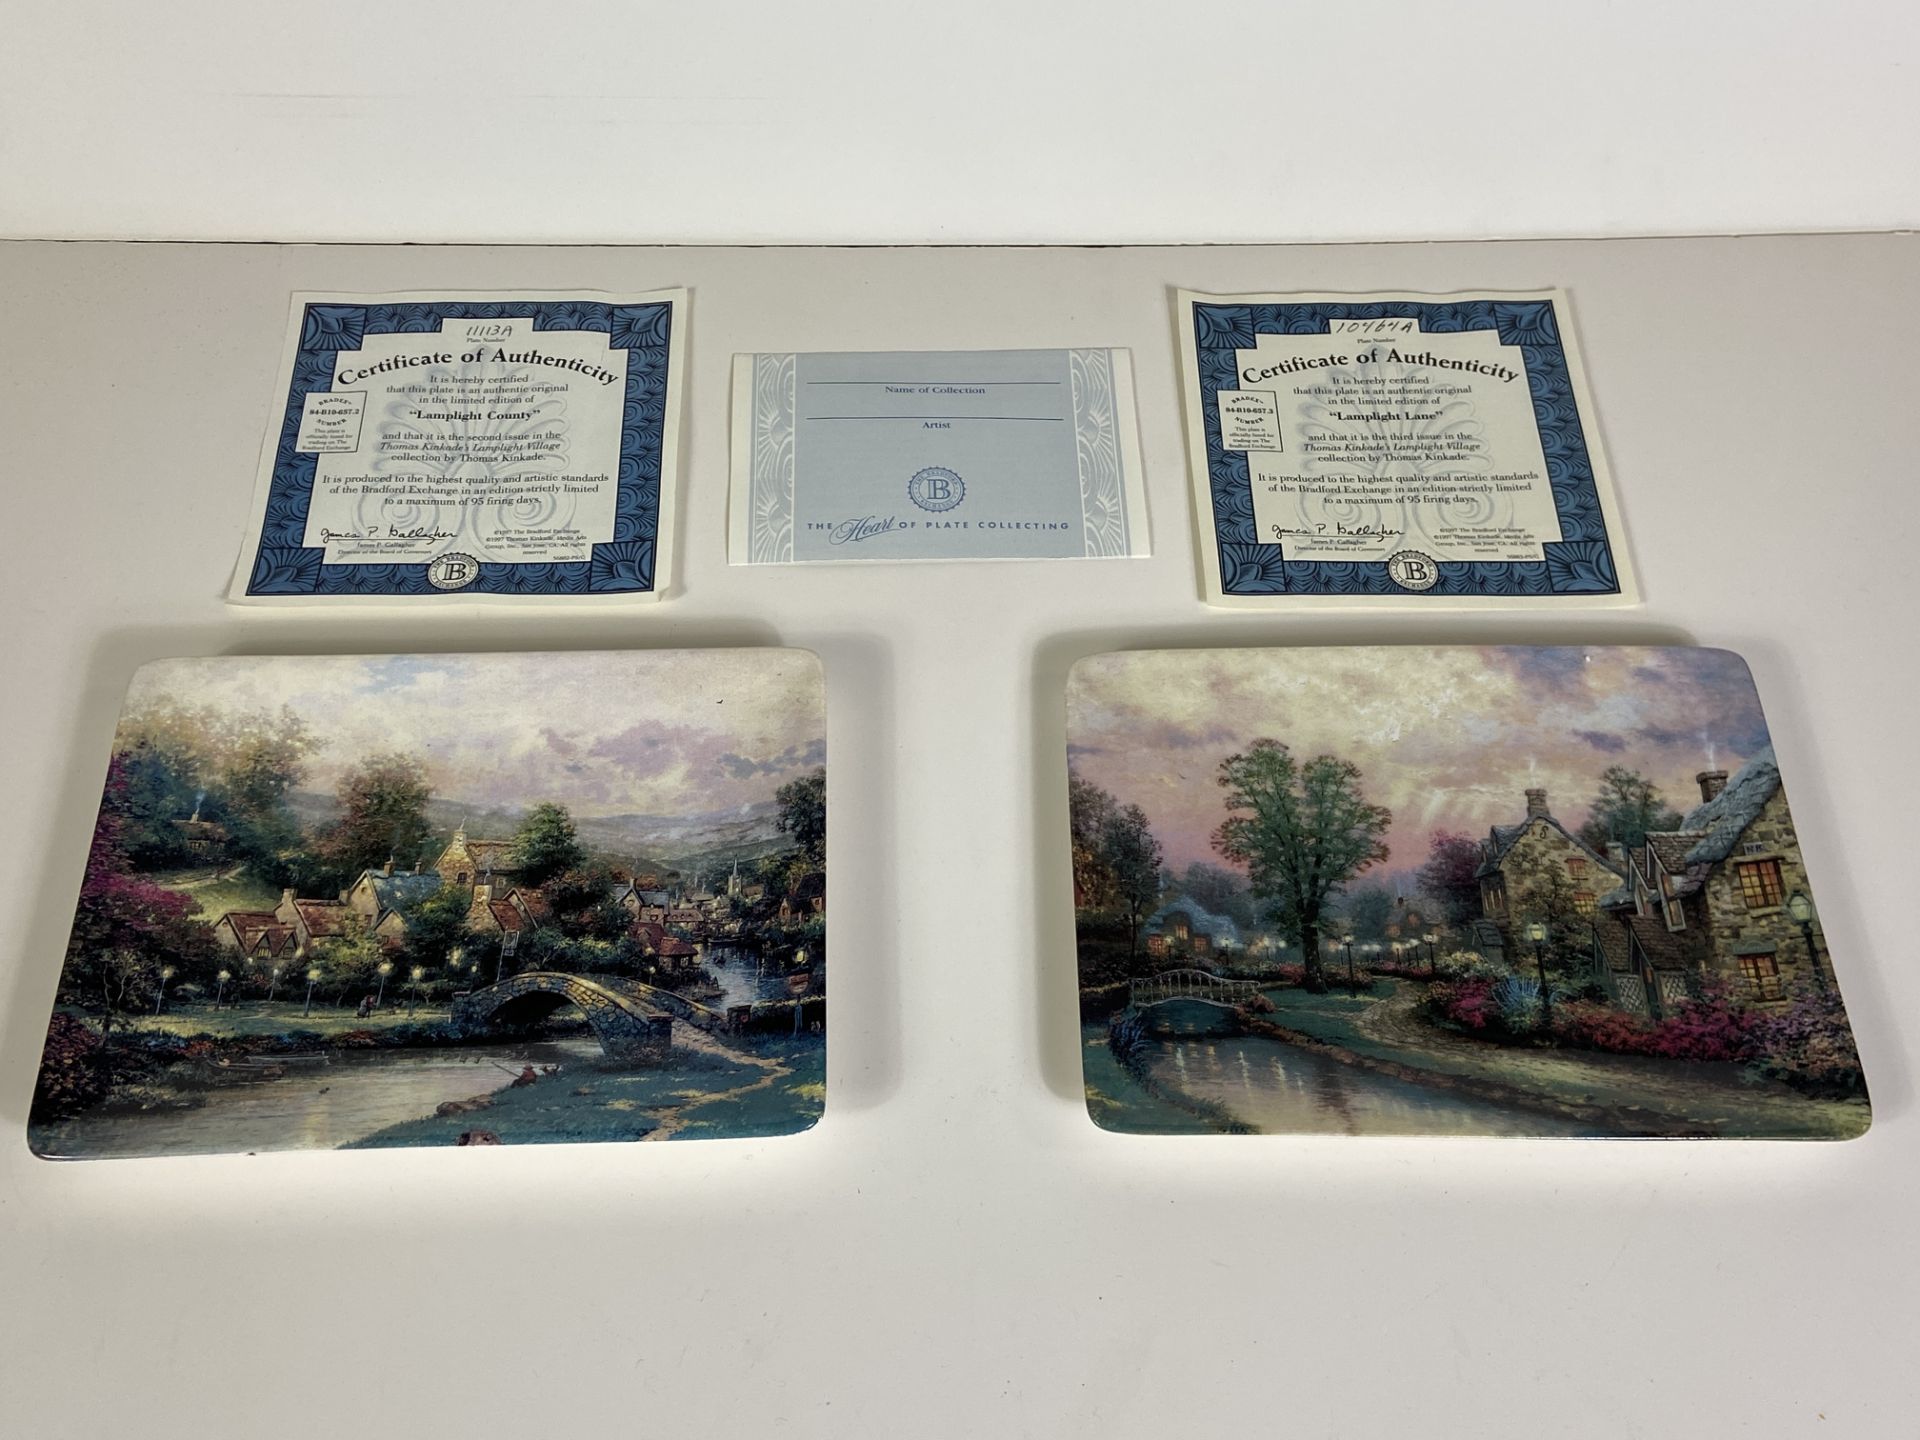 2 Thomas Kinkade Plates with Certificates of Authenticity